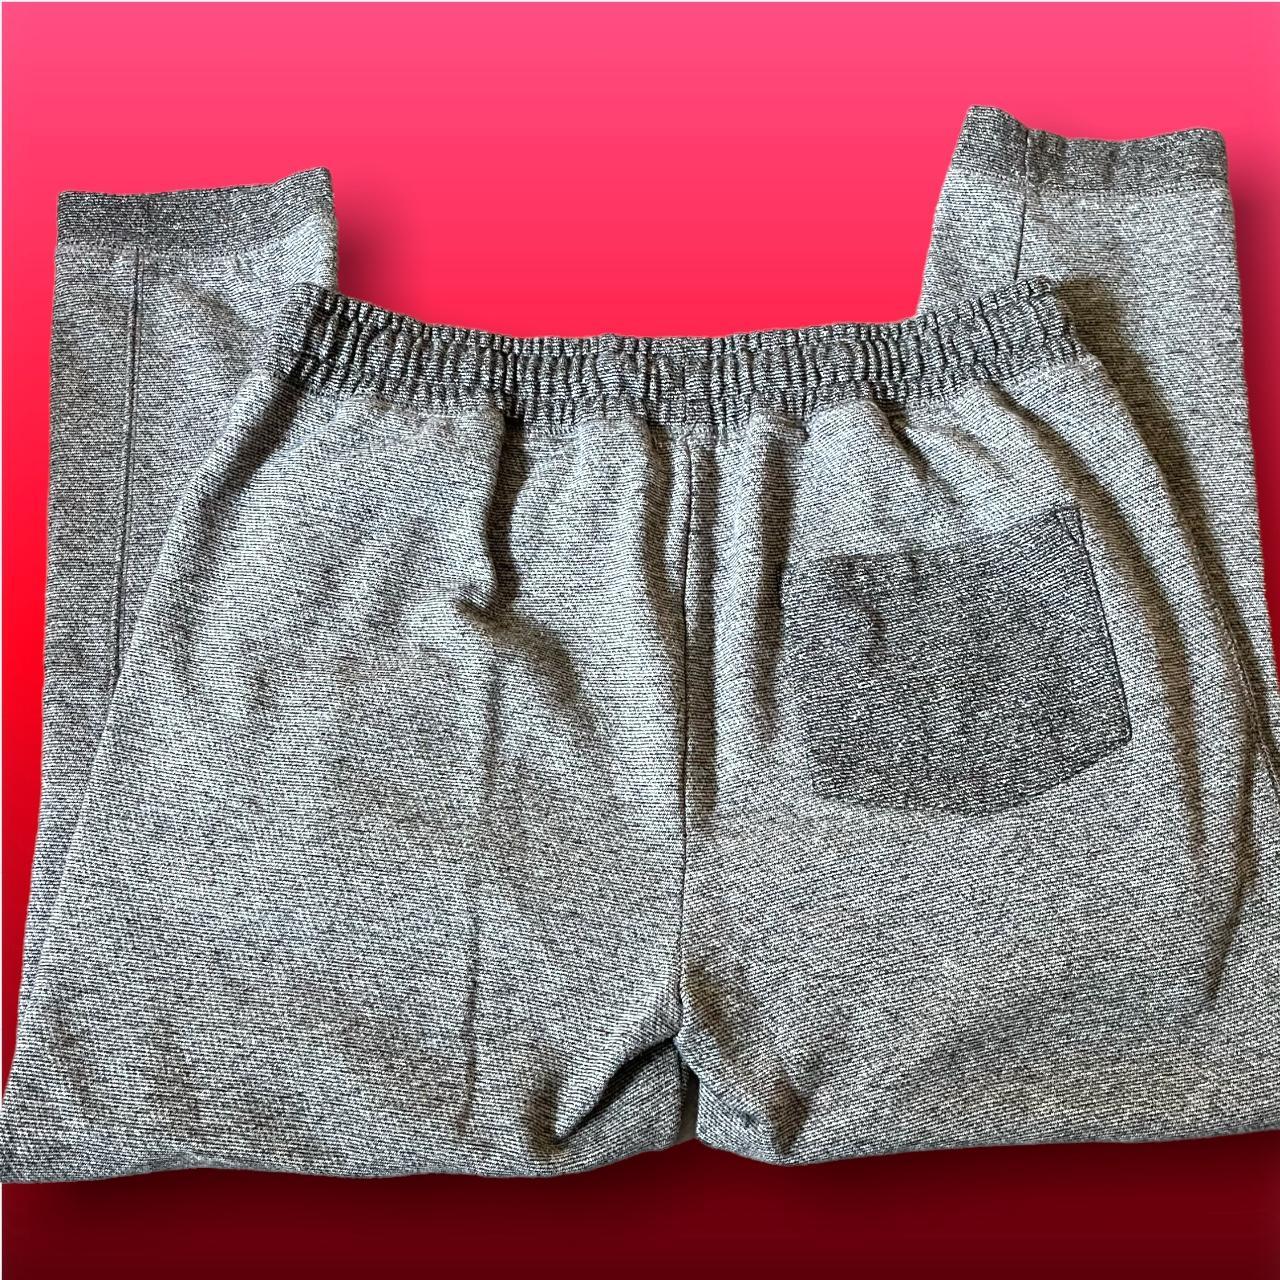 Product Image 3 - Marled Gray Sweatpants Sz L
Topman
Drawstring